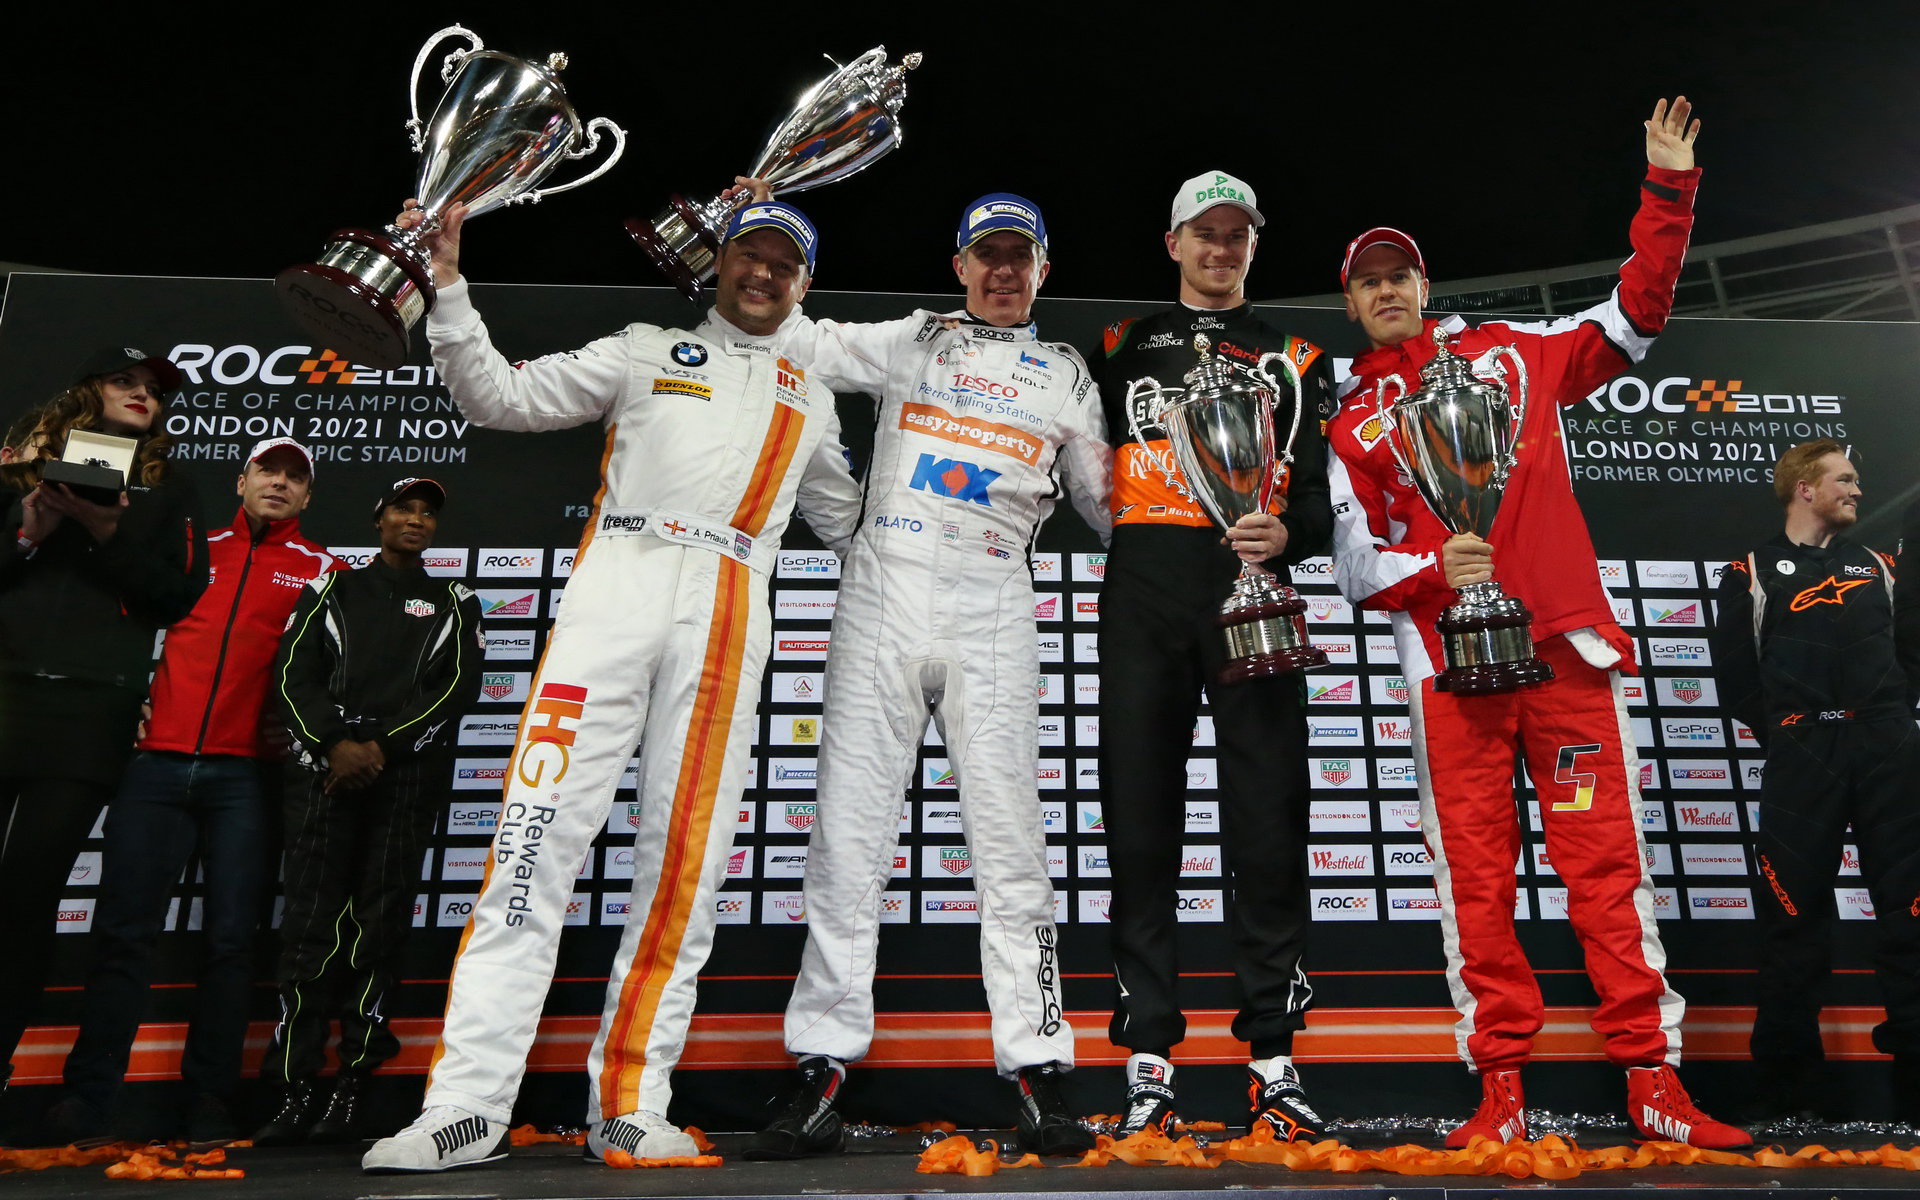 Andy Priaulx, Plato, Nico Hülkenberg a Sebastian Vettel na podium na Race of champions